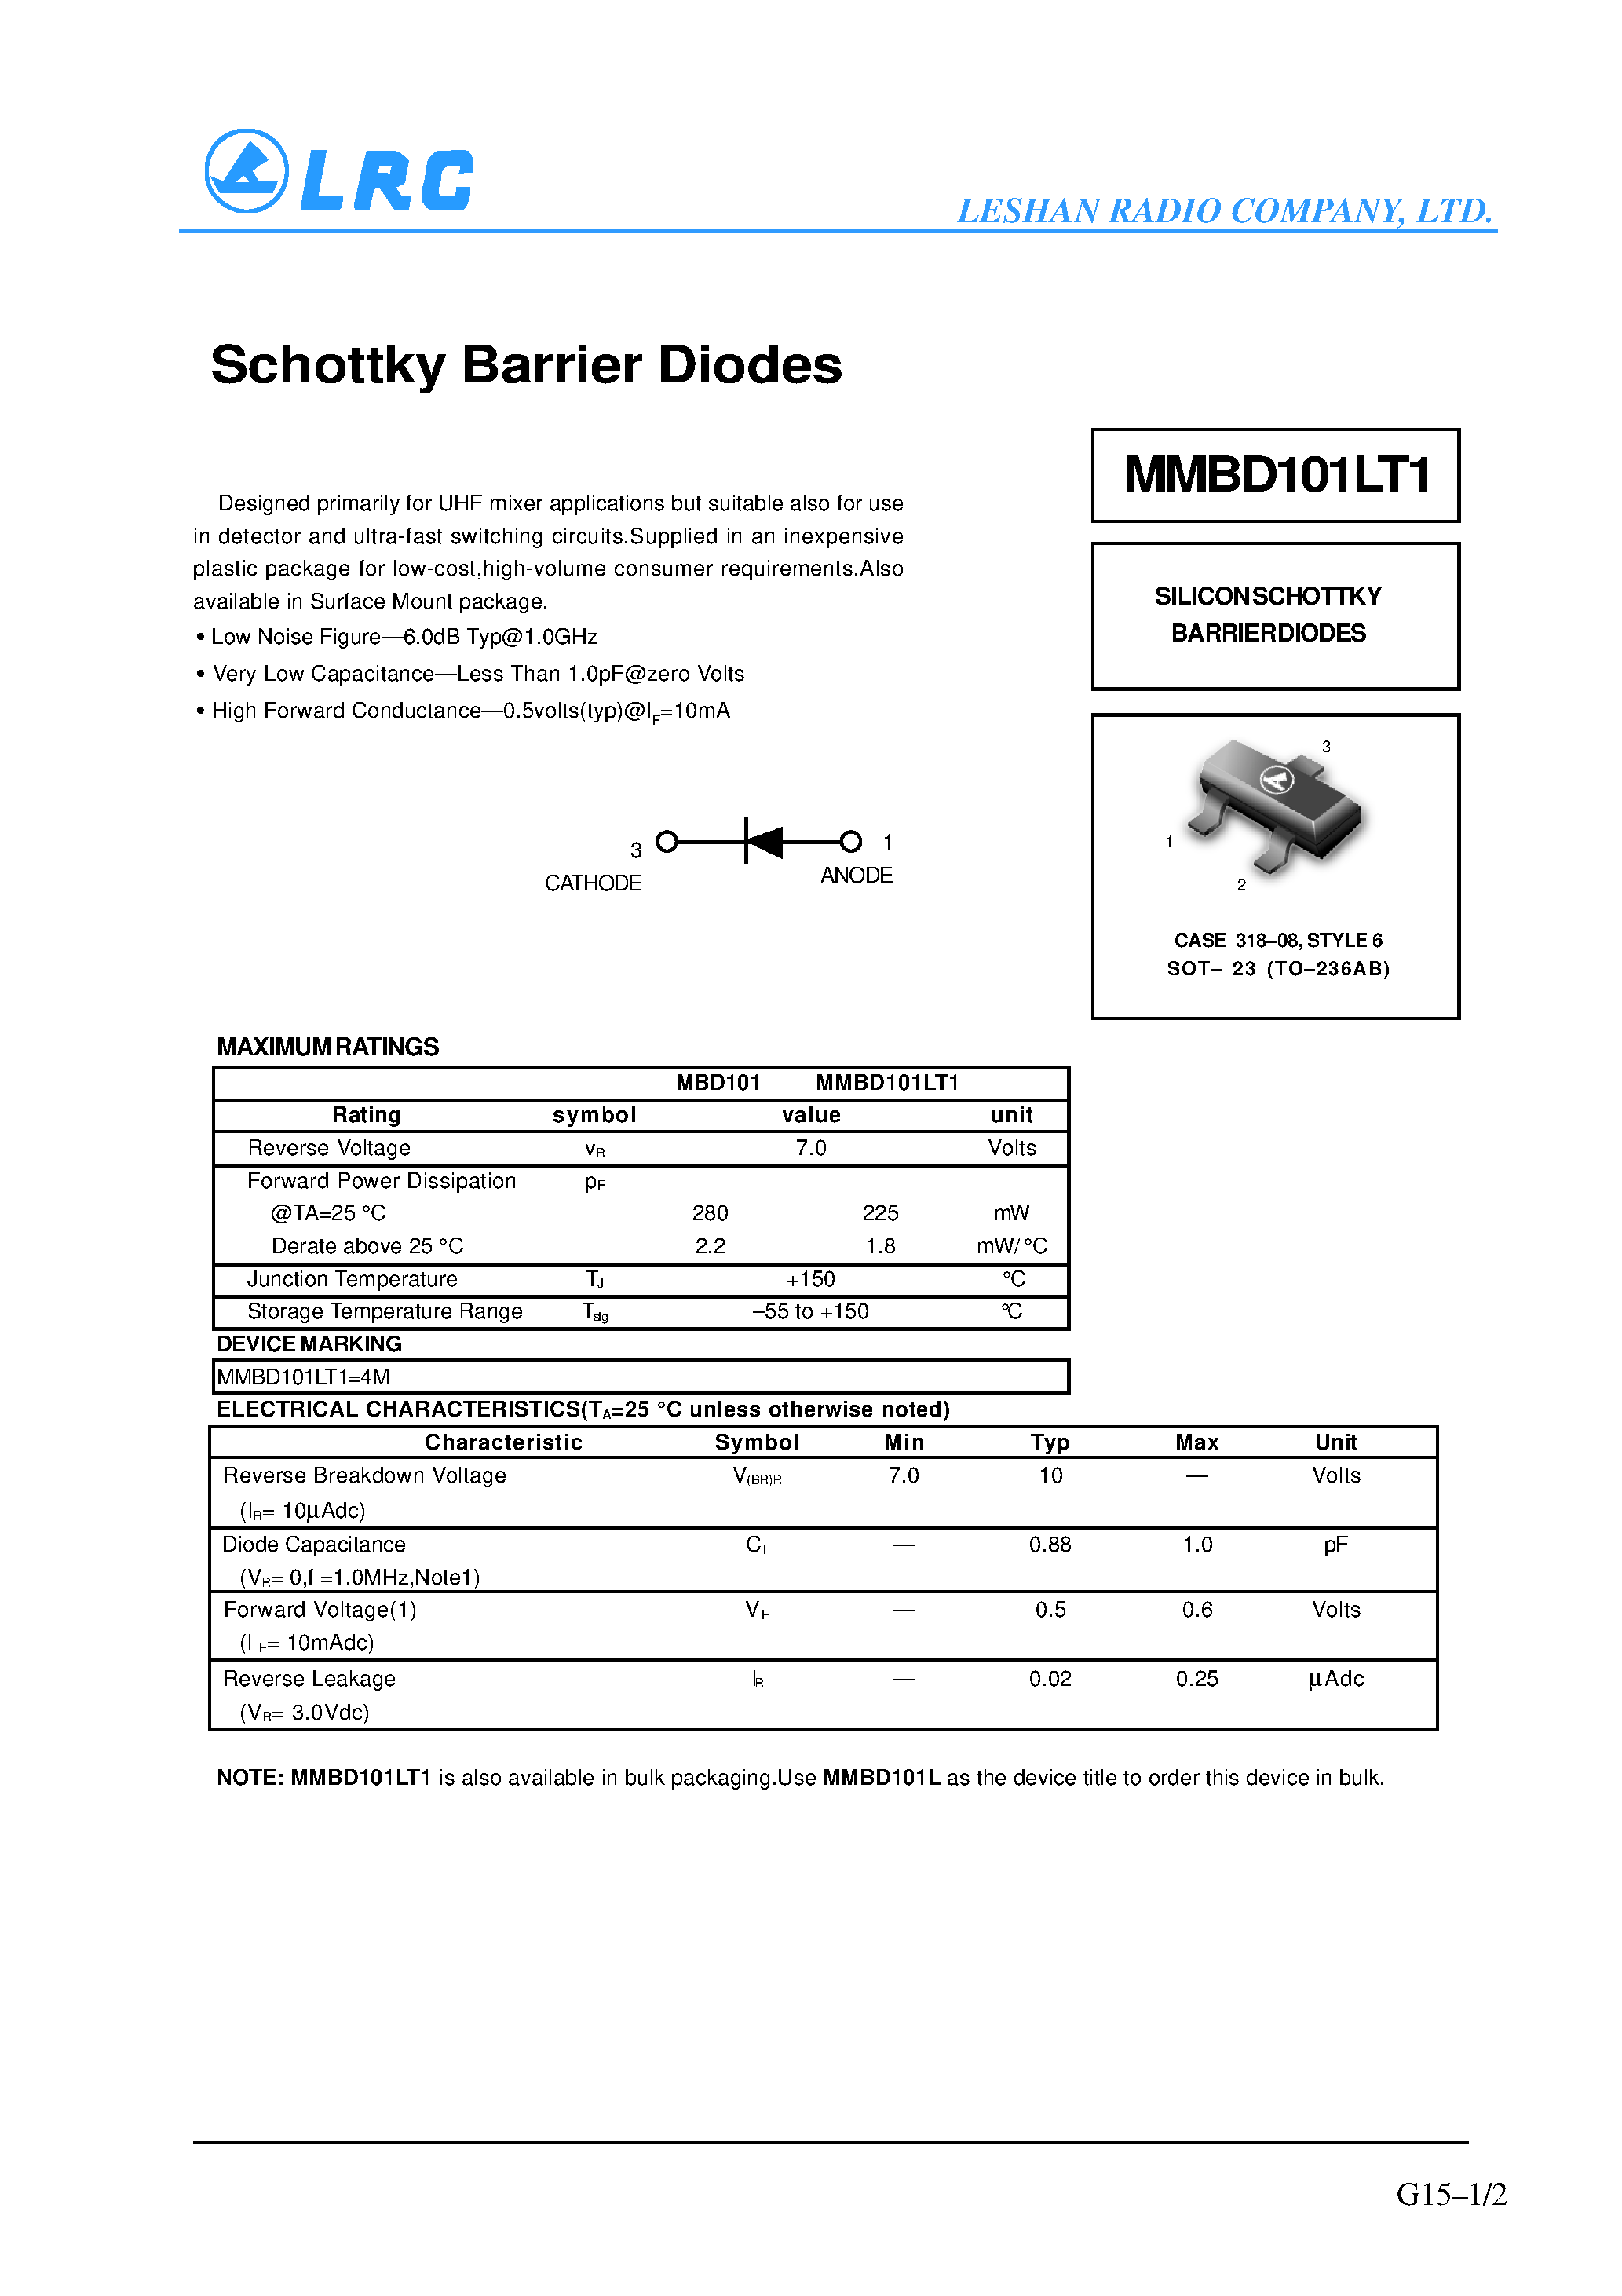 Даташит MMBD101 - Schottky Barrier Diodes страница 1